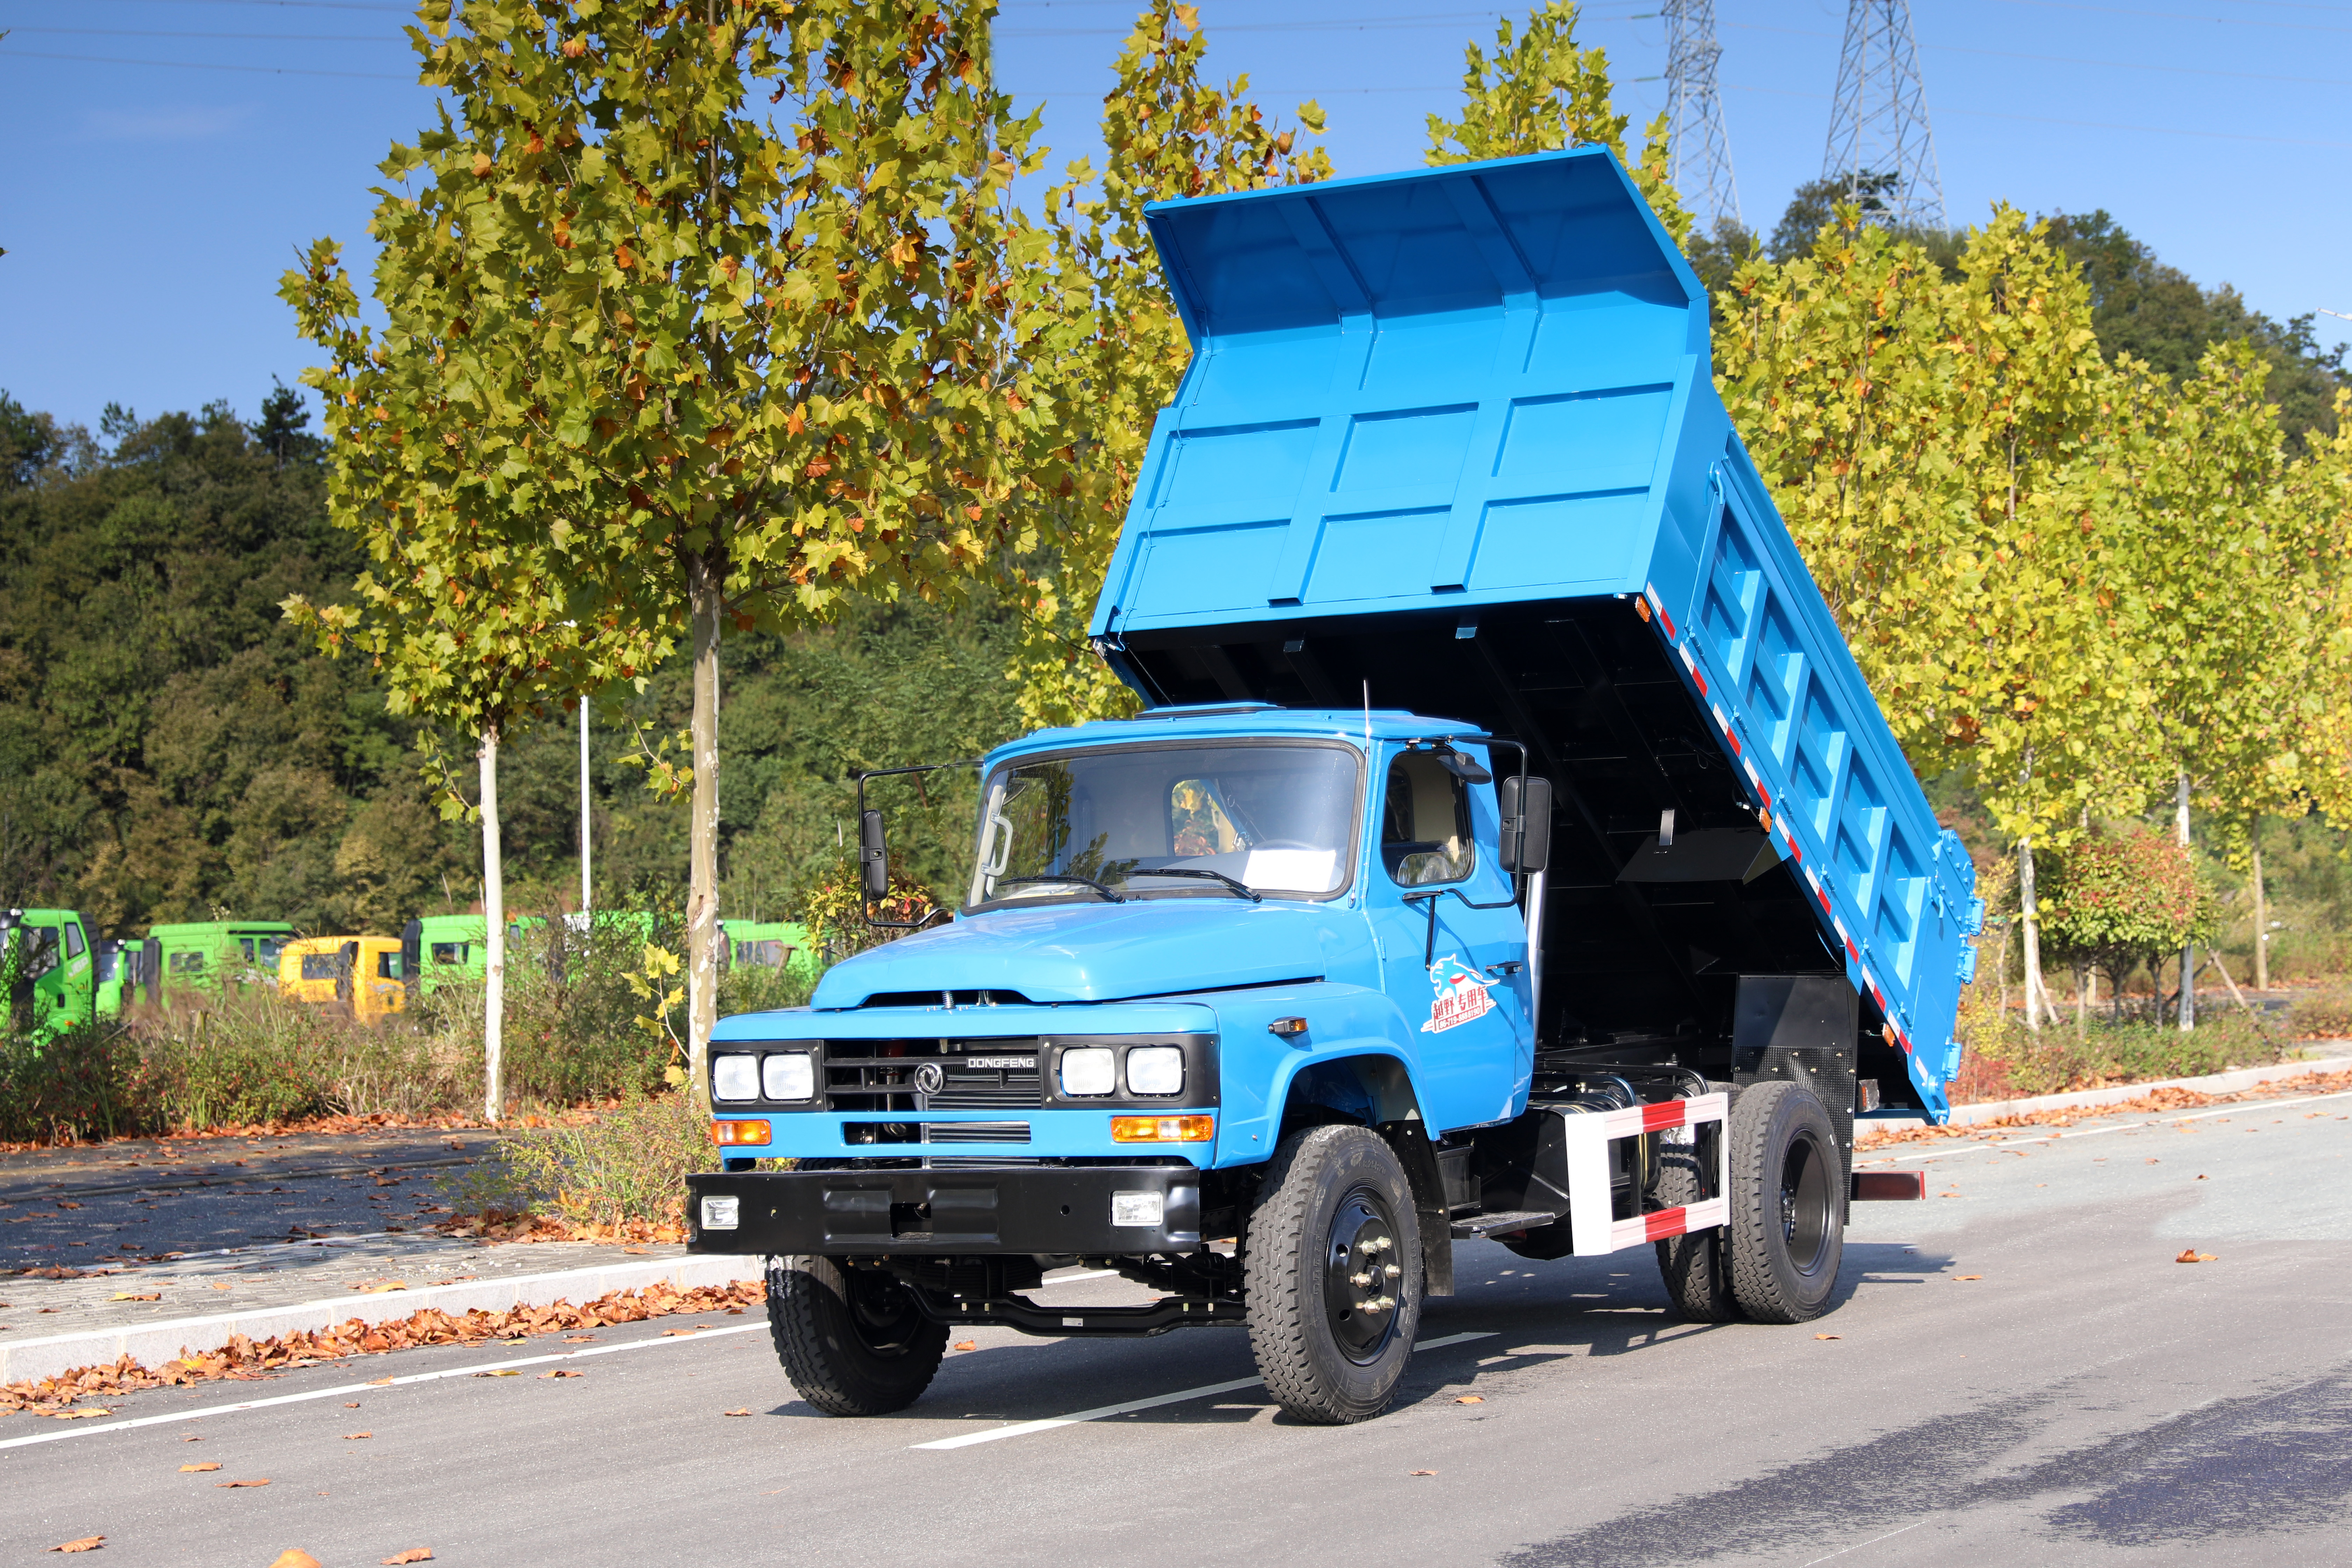 Dongfeng Pointed Tipper Truck - သယ်ယူပို့ဆောင်ရေးလမ်းပေါ်တွင် ရွေးချယ်မှုကောင်းတစ်ခု။